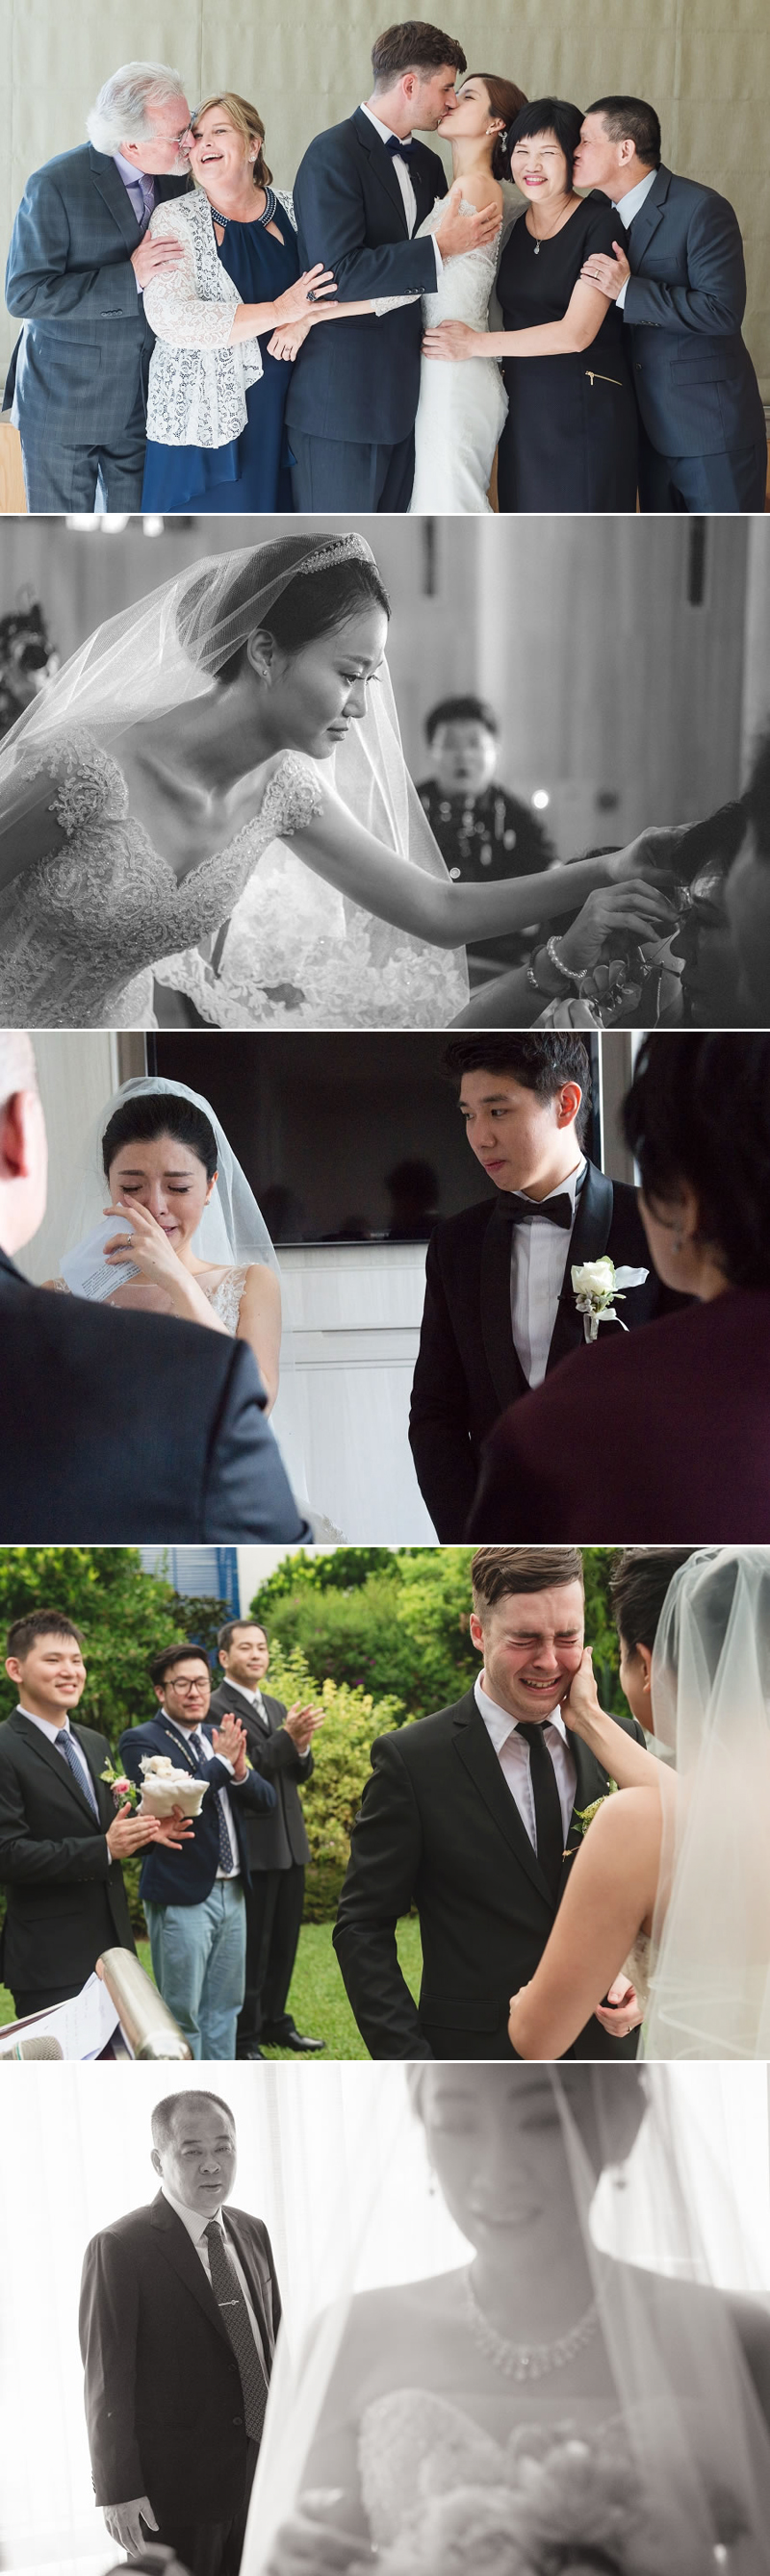 WeddingPhotography03-moments (Roger Wu)